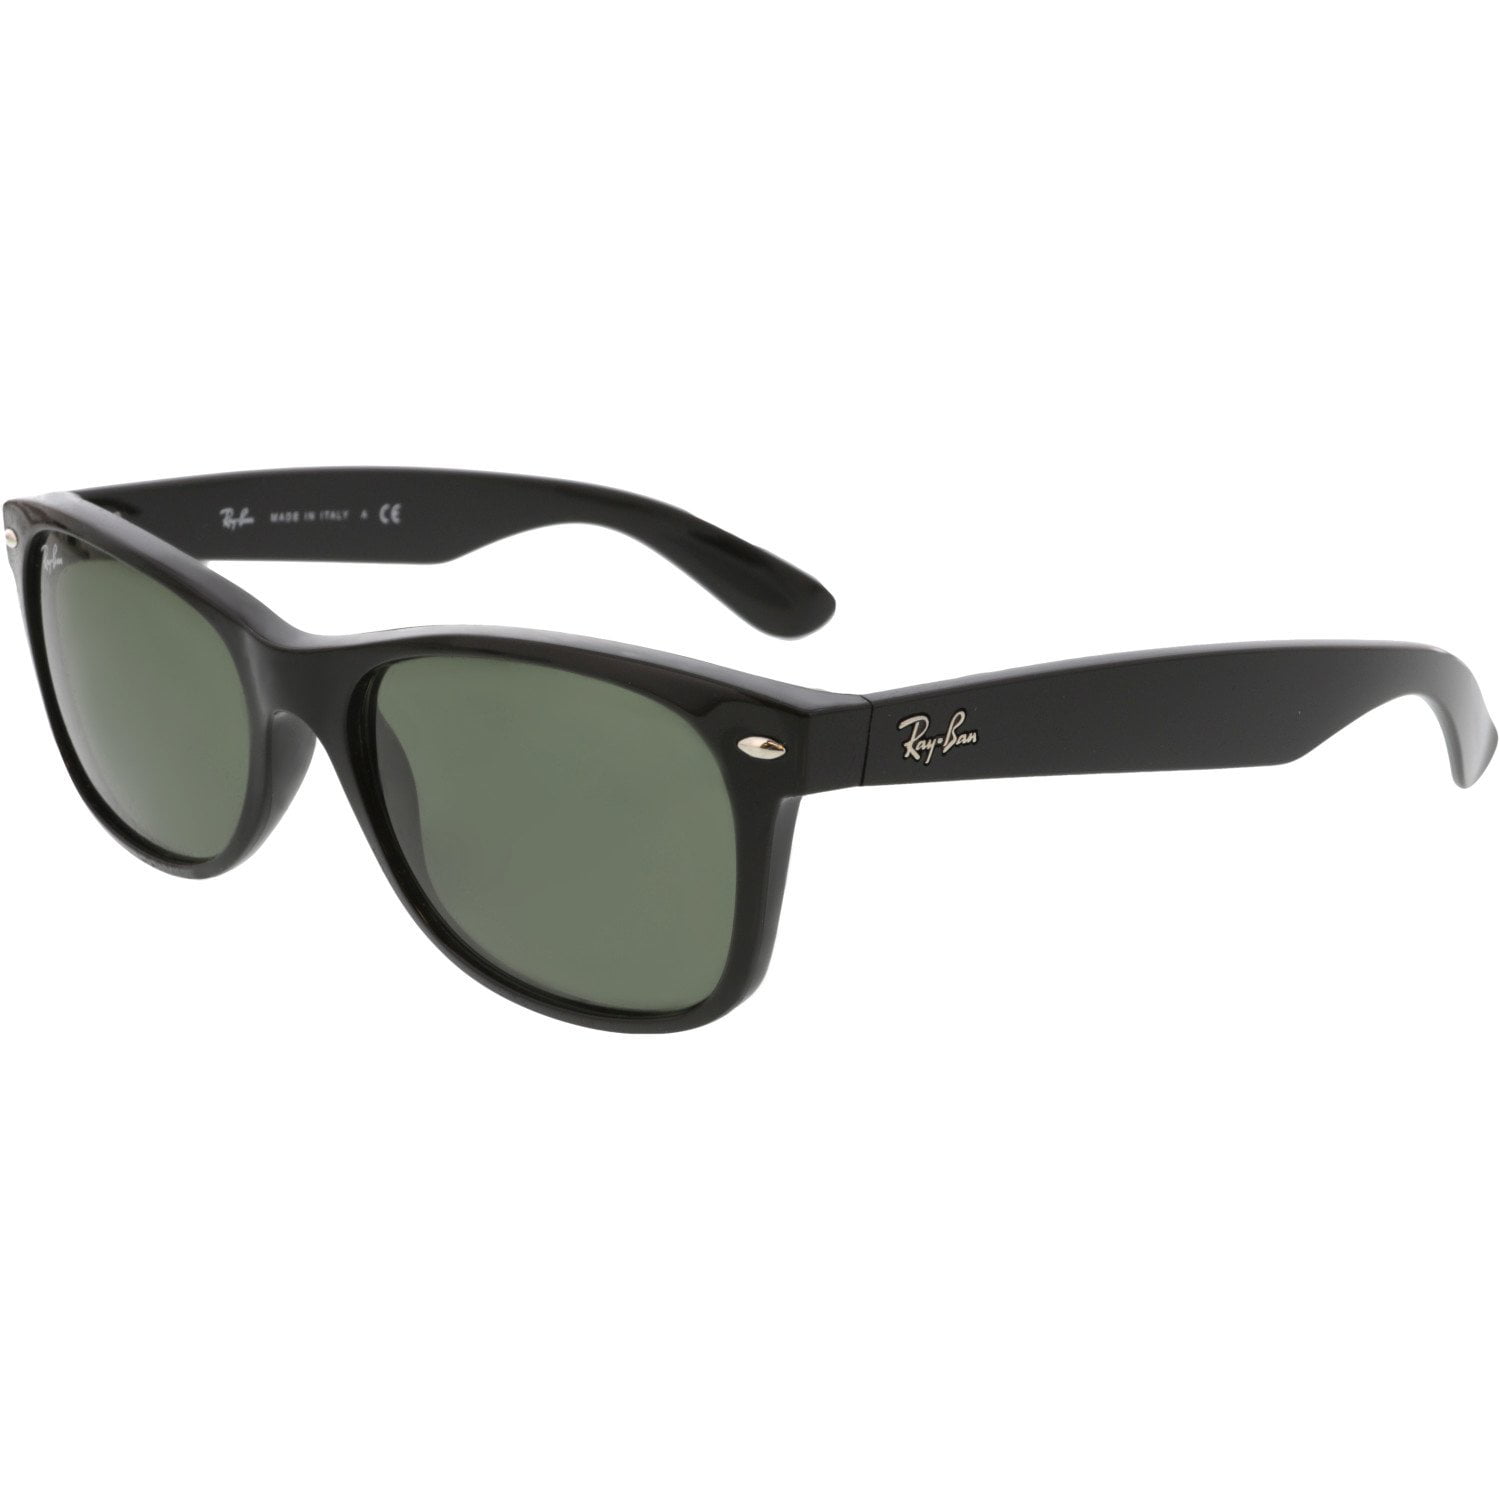 Ray-Ban Men's New Wayfarer RB2132-901L-55 Black Oval Sunglasses